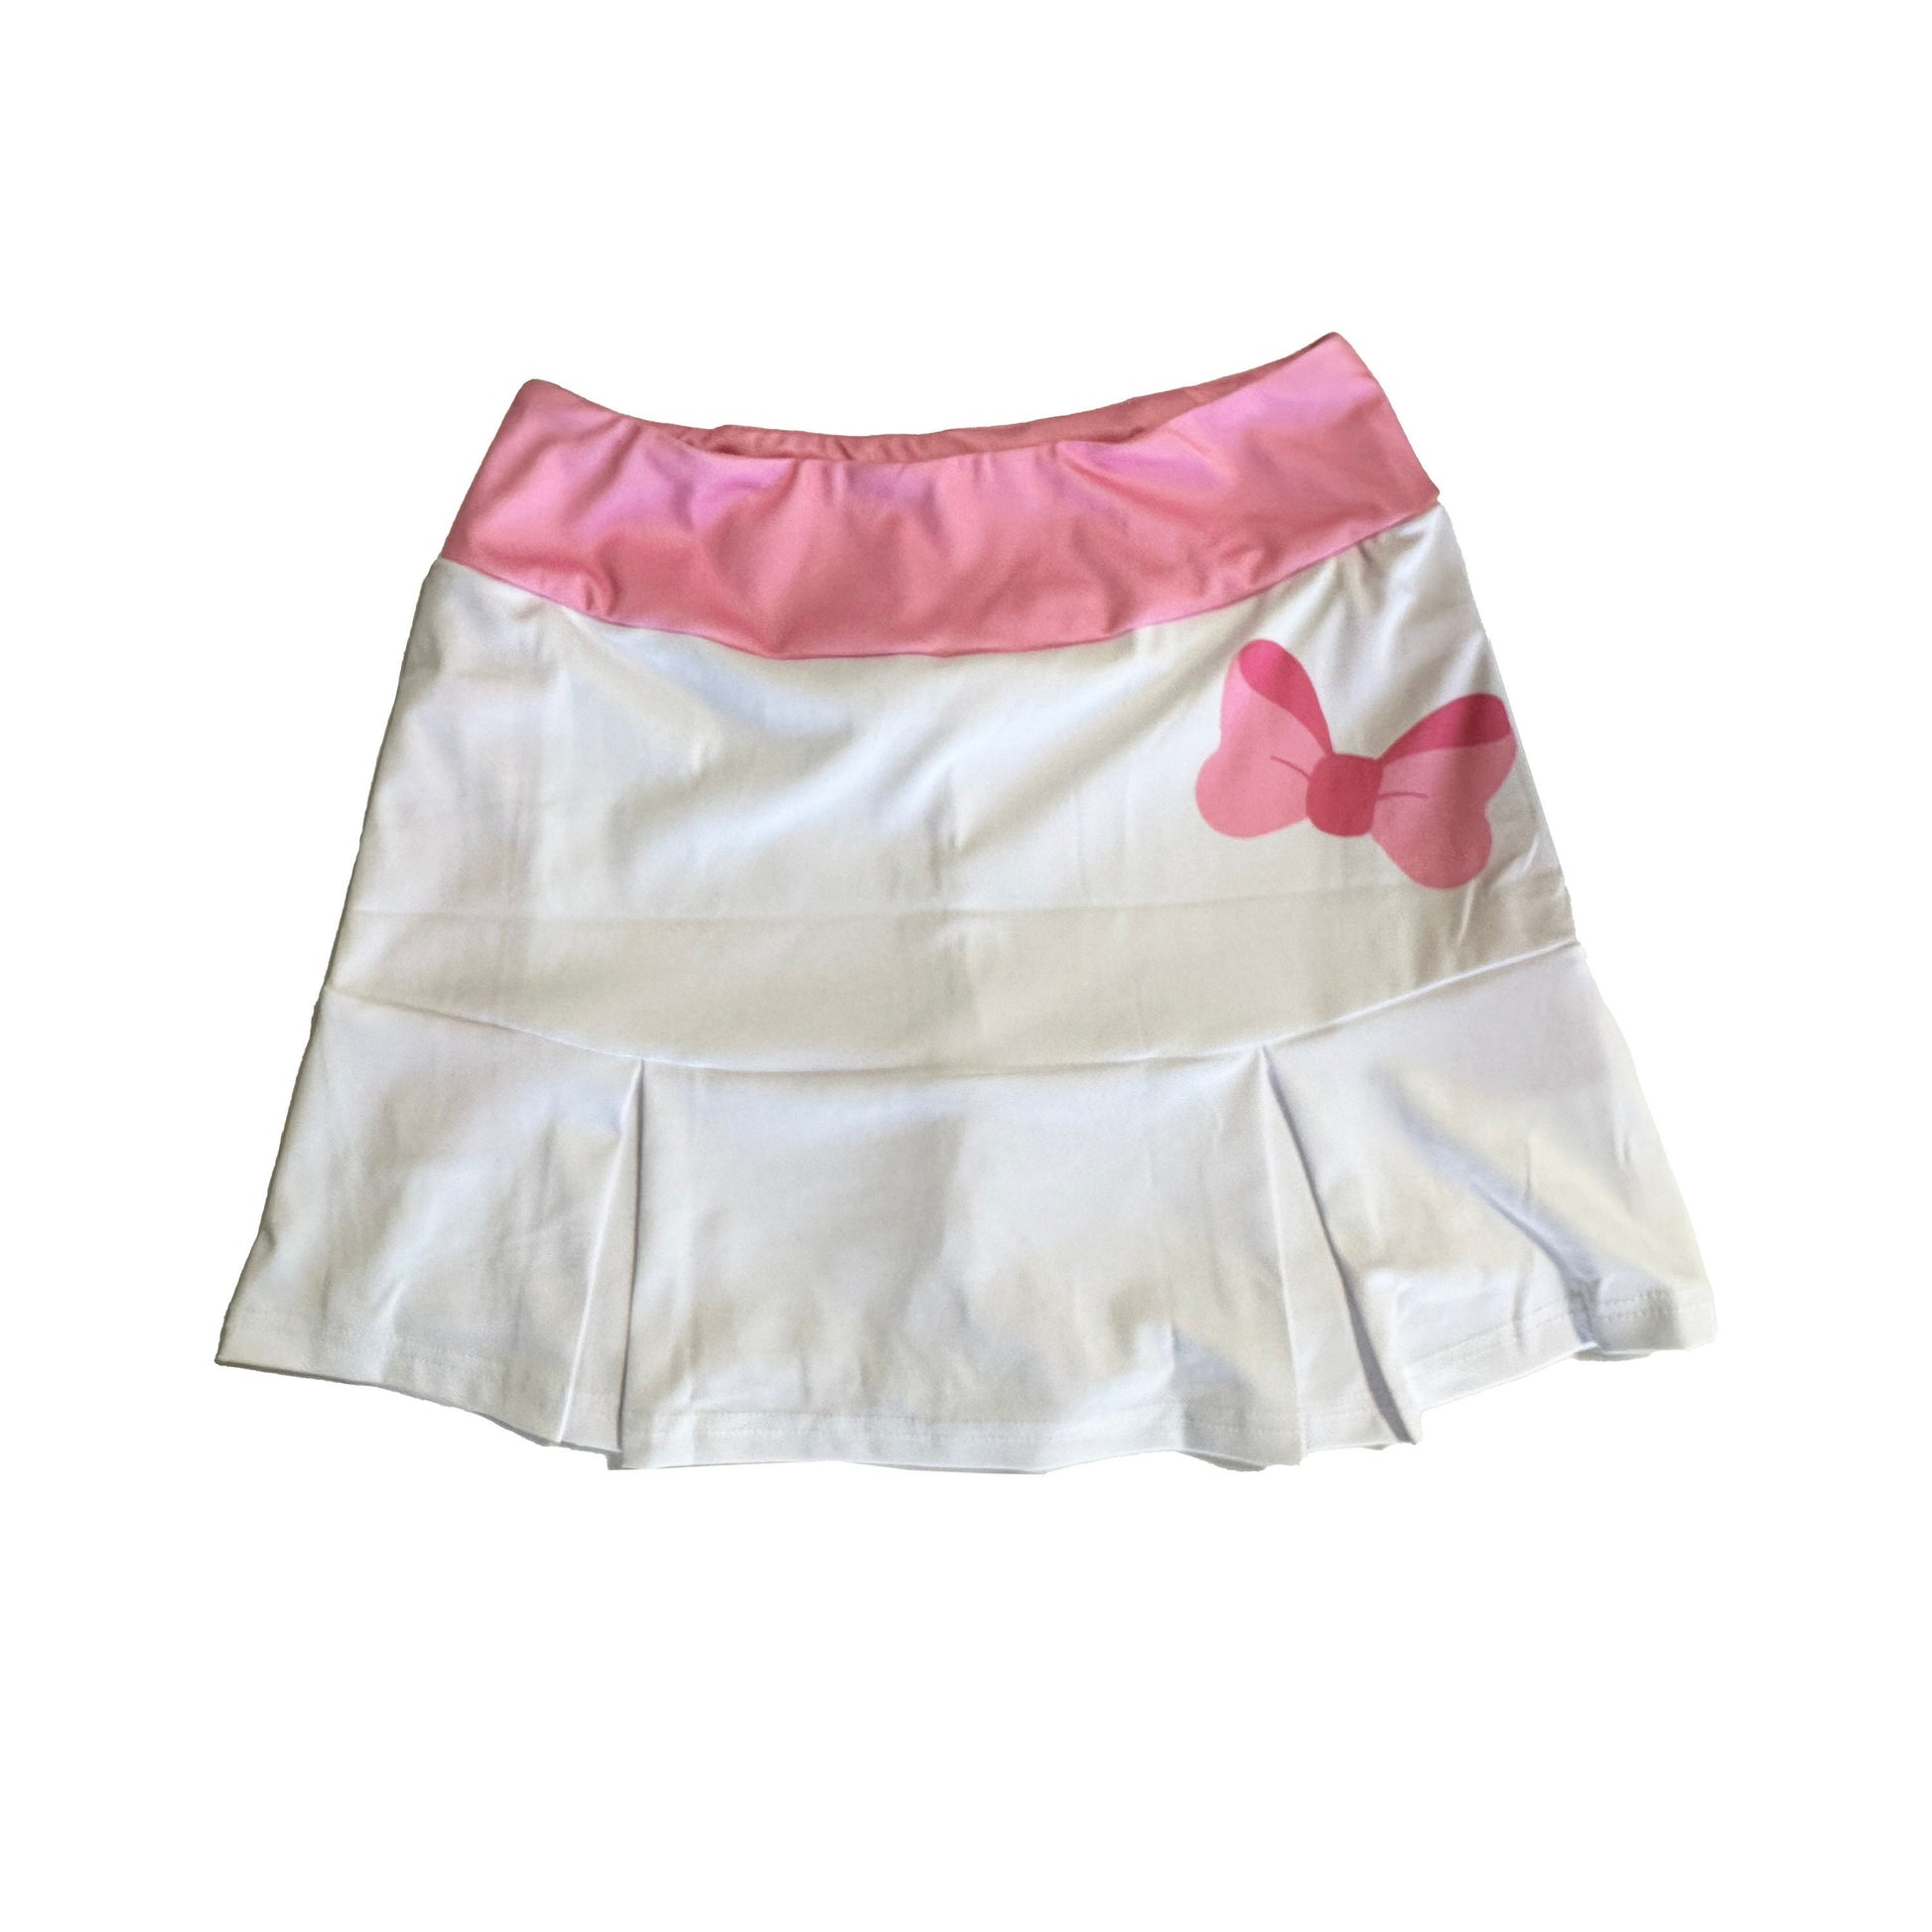 Marie The Aristocats Inspired Sport Skirt